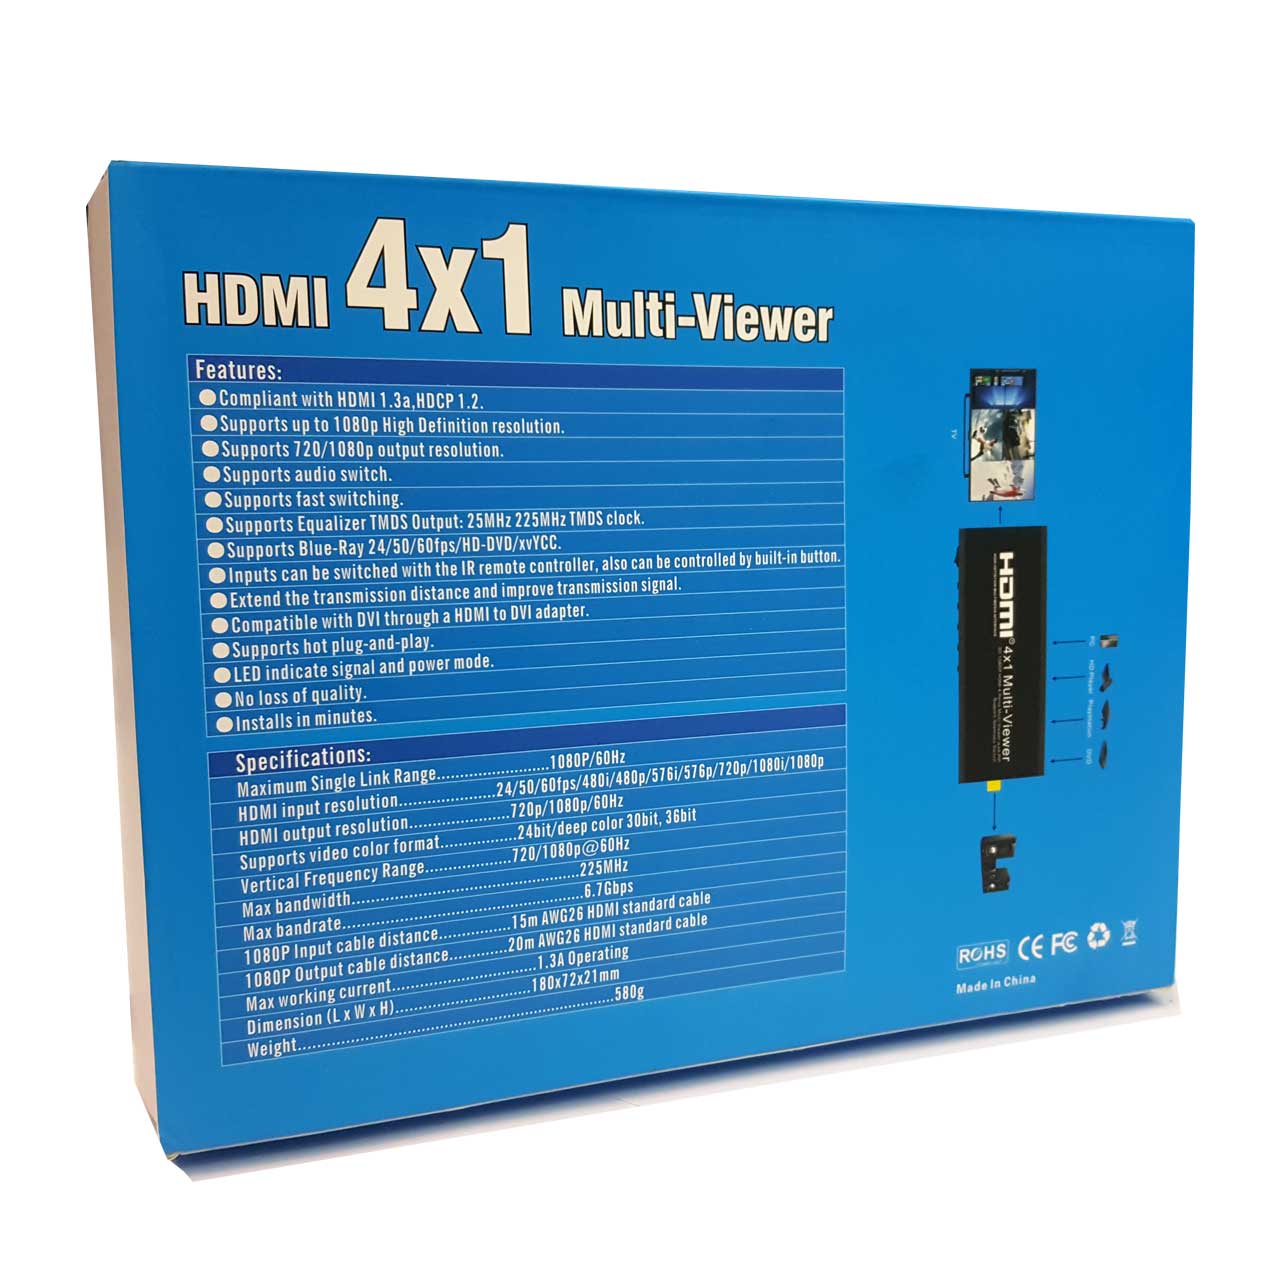 HDMI 4x1 Mulit-Viewer